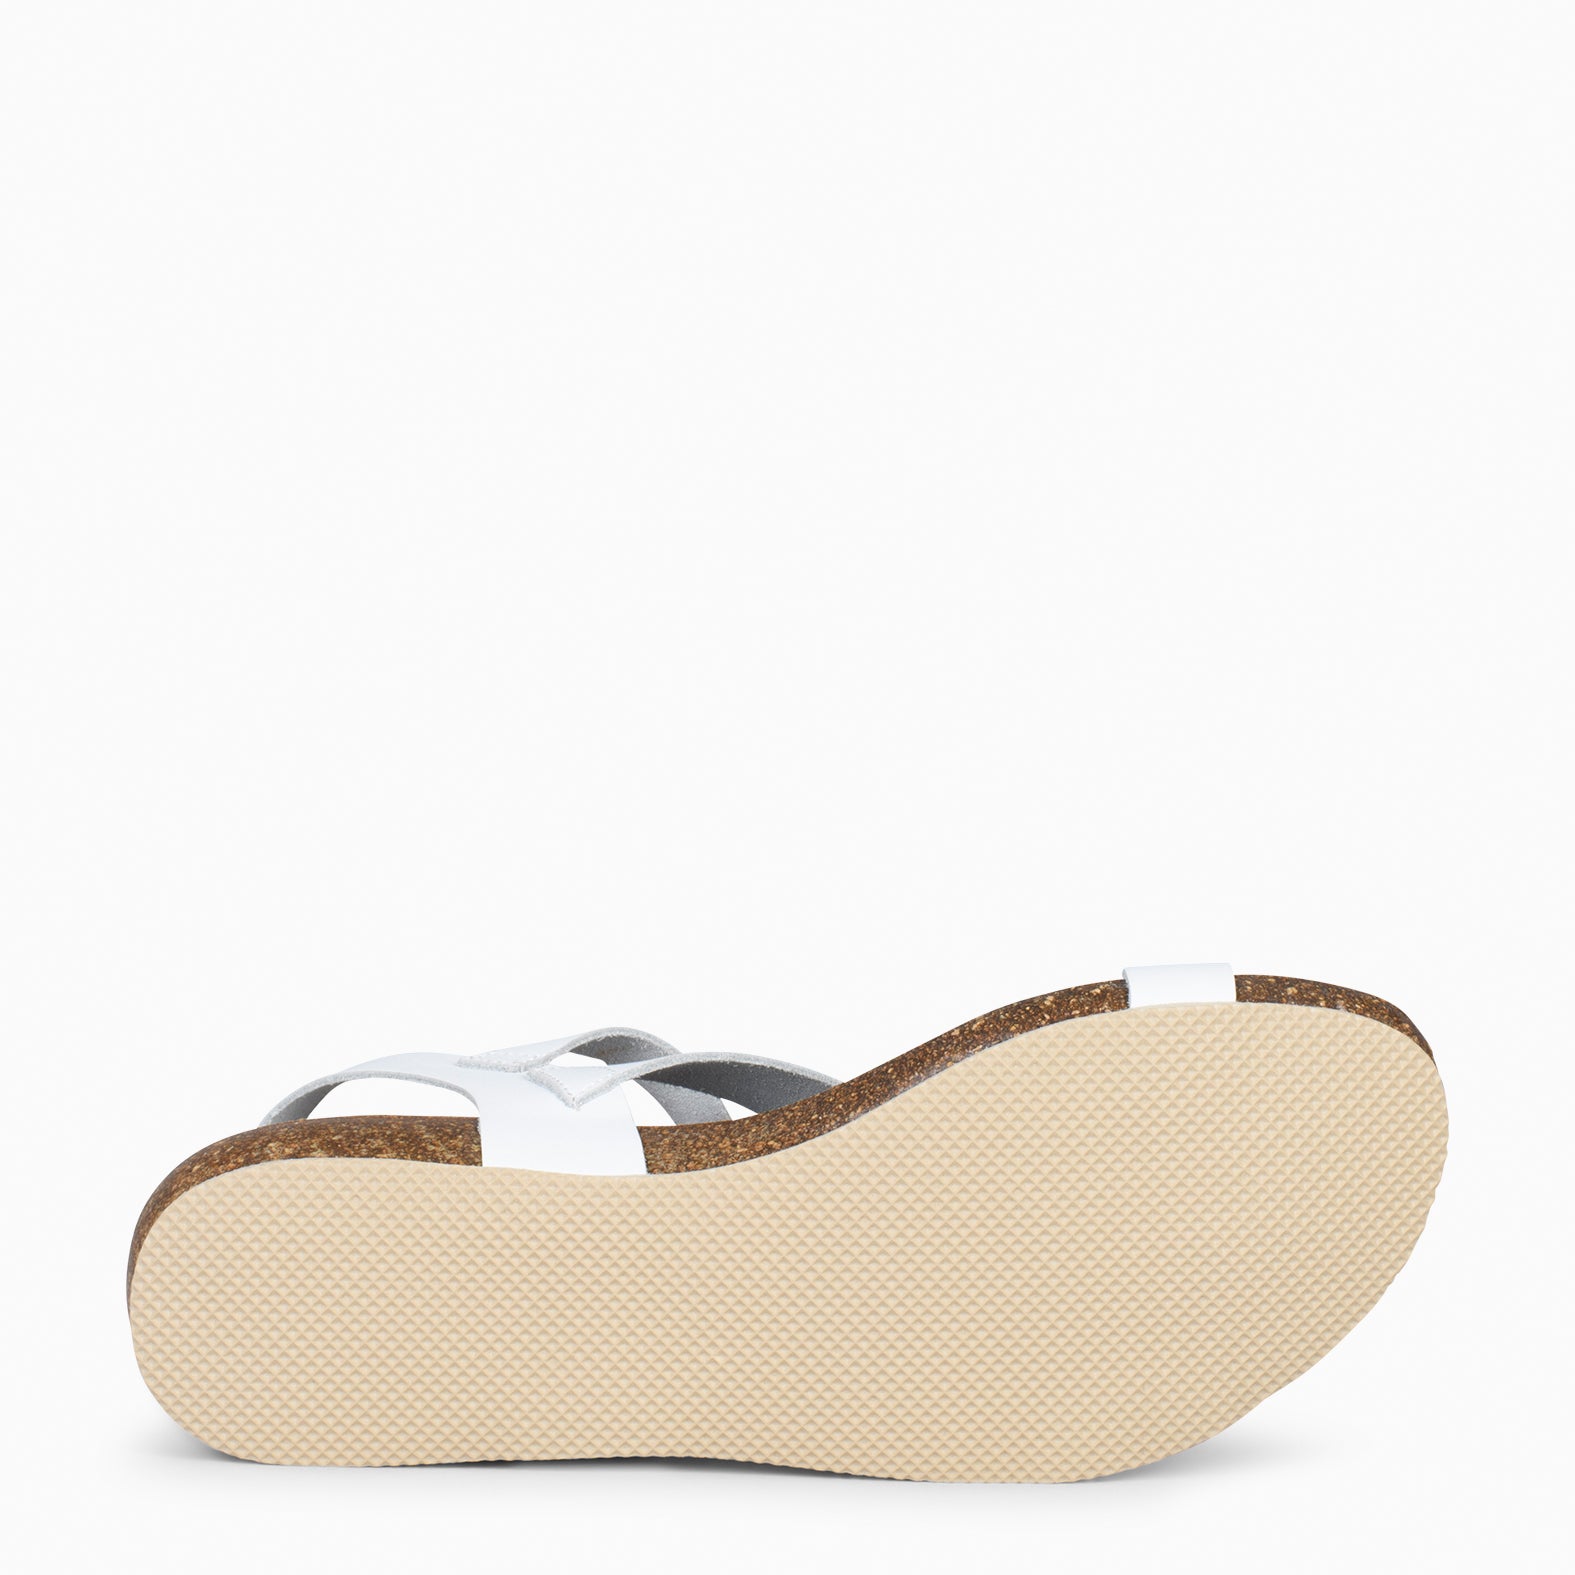 LIS – WHITE BIO leather sandals